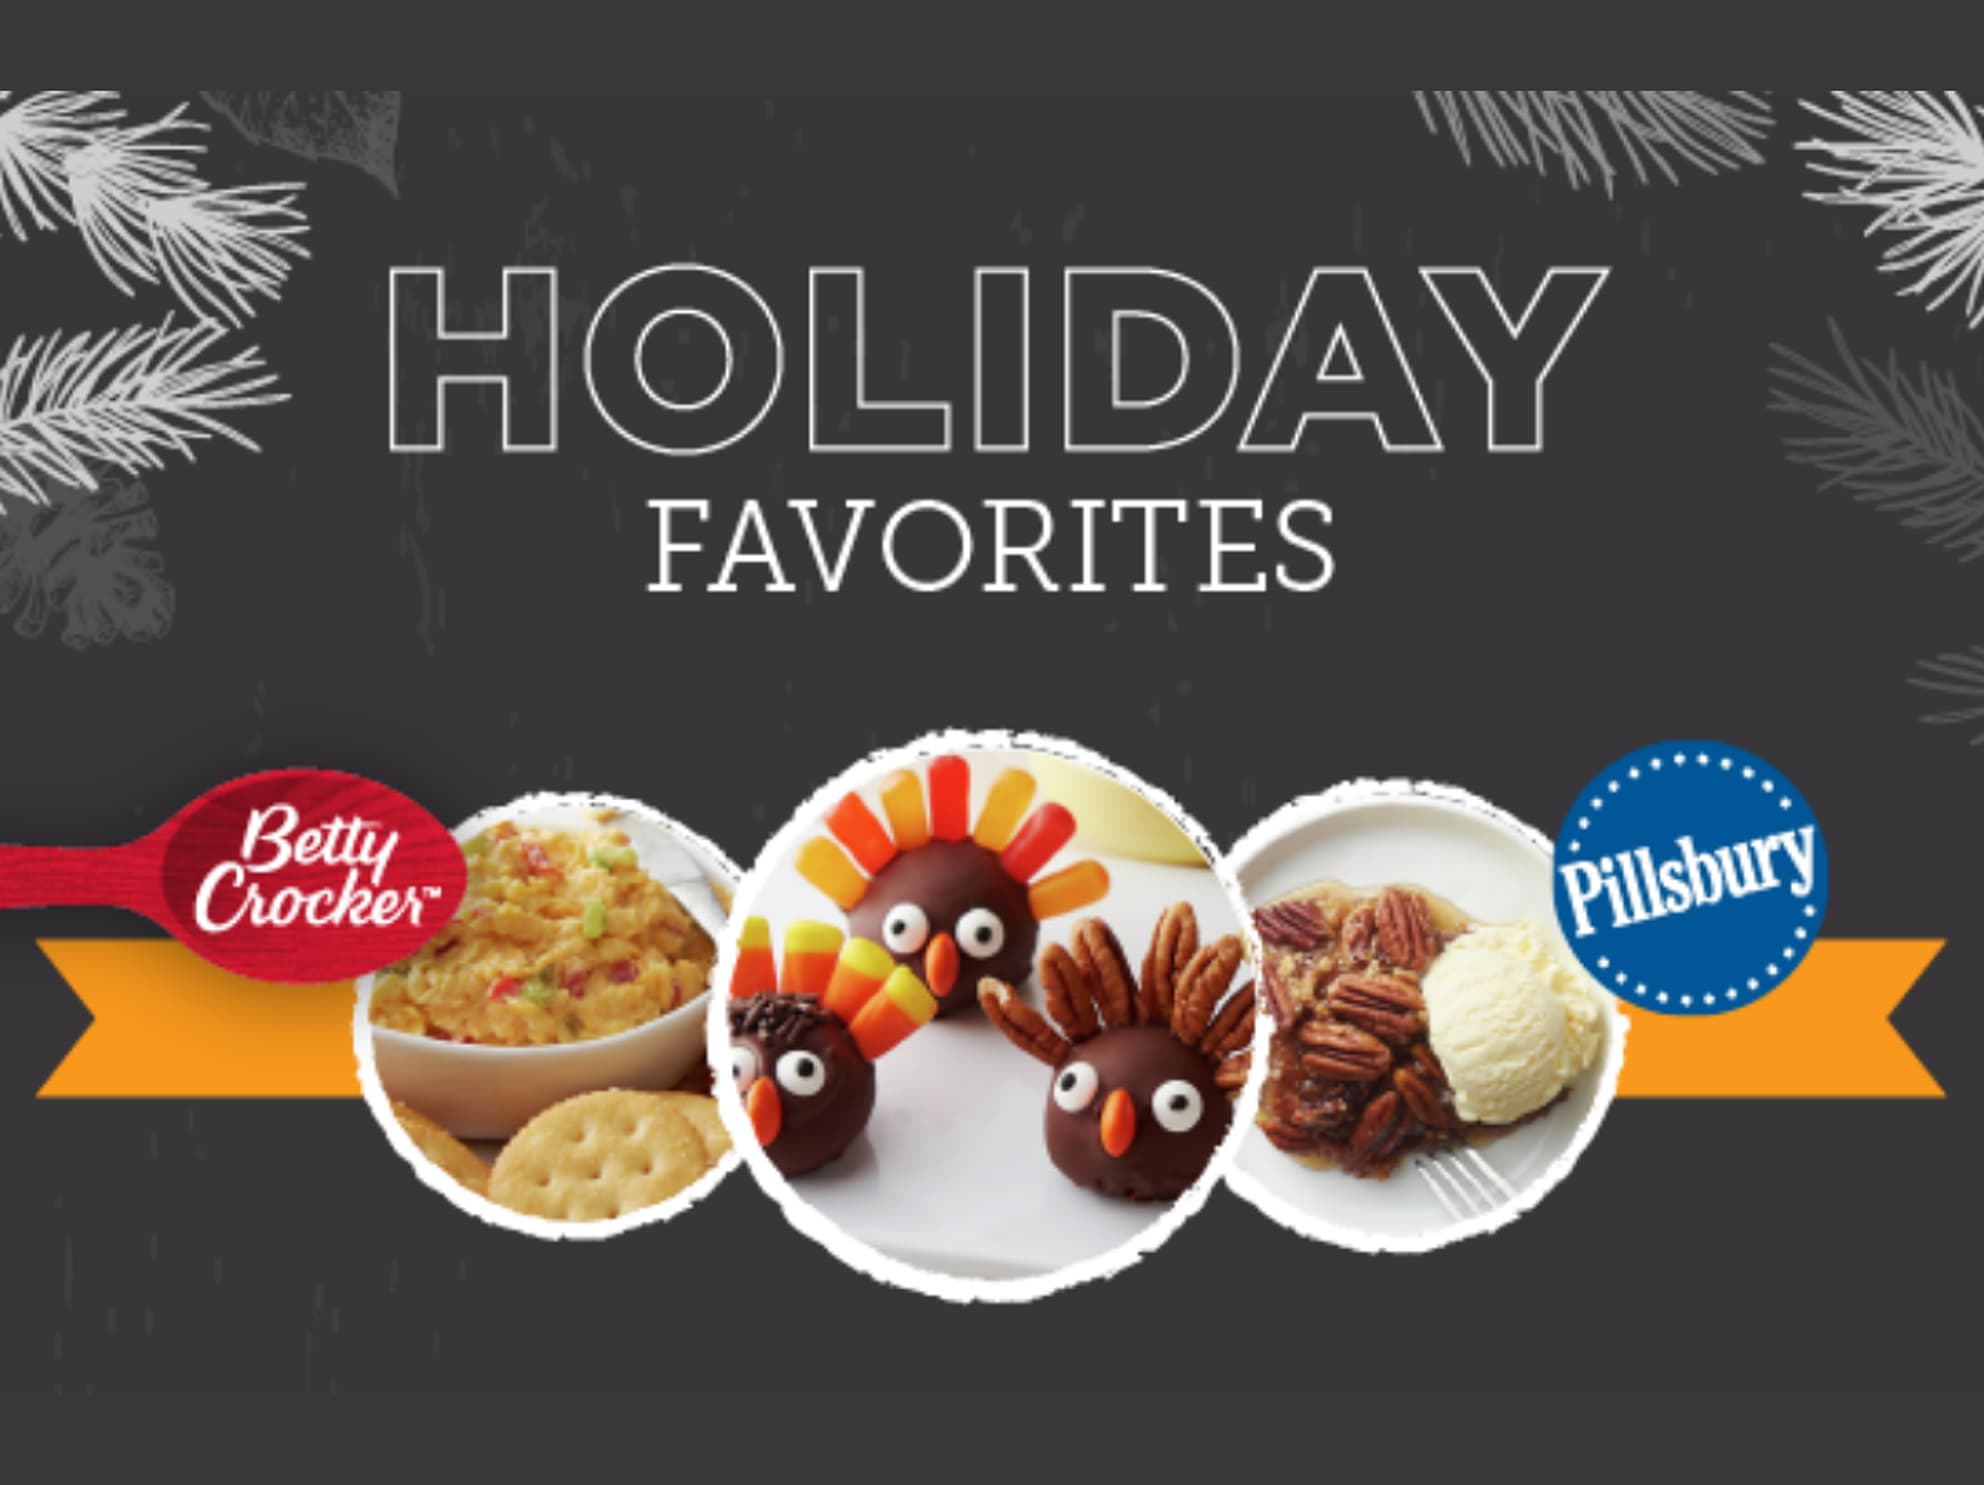 Holiday favorites Pillsbury and Betty Crocker